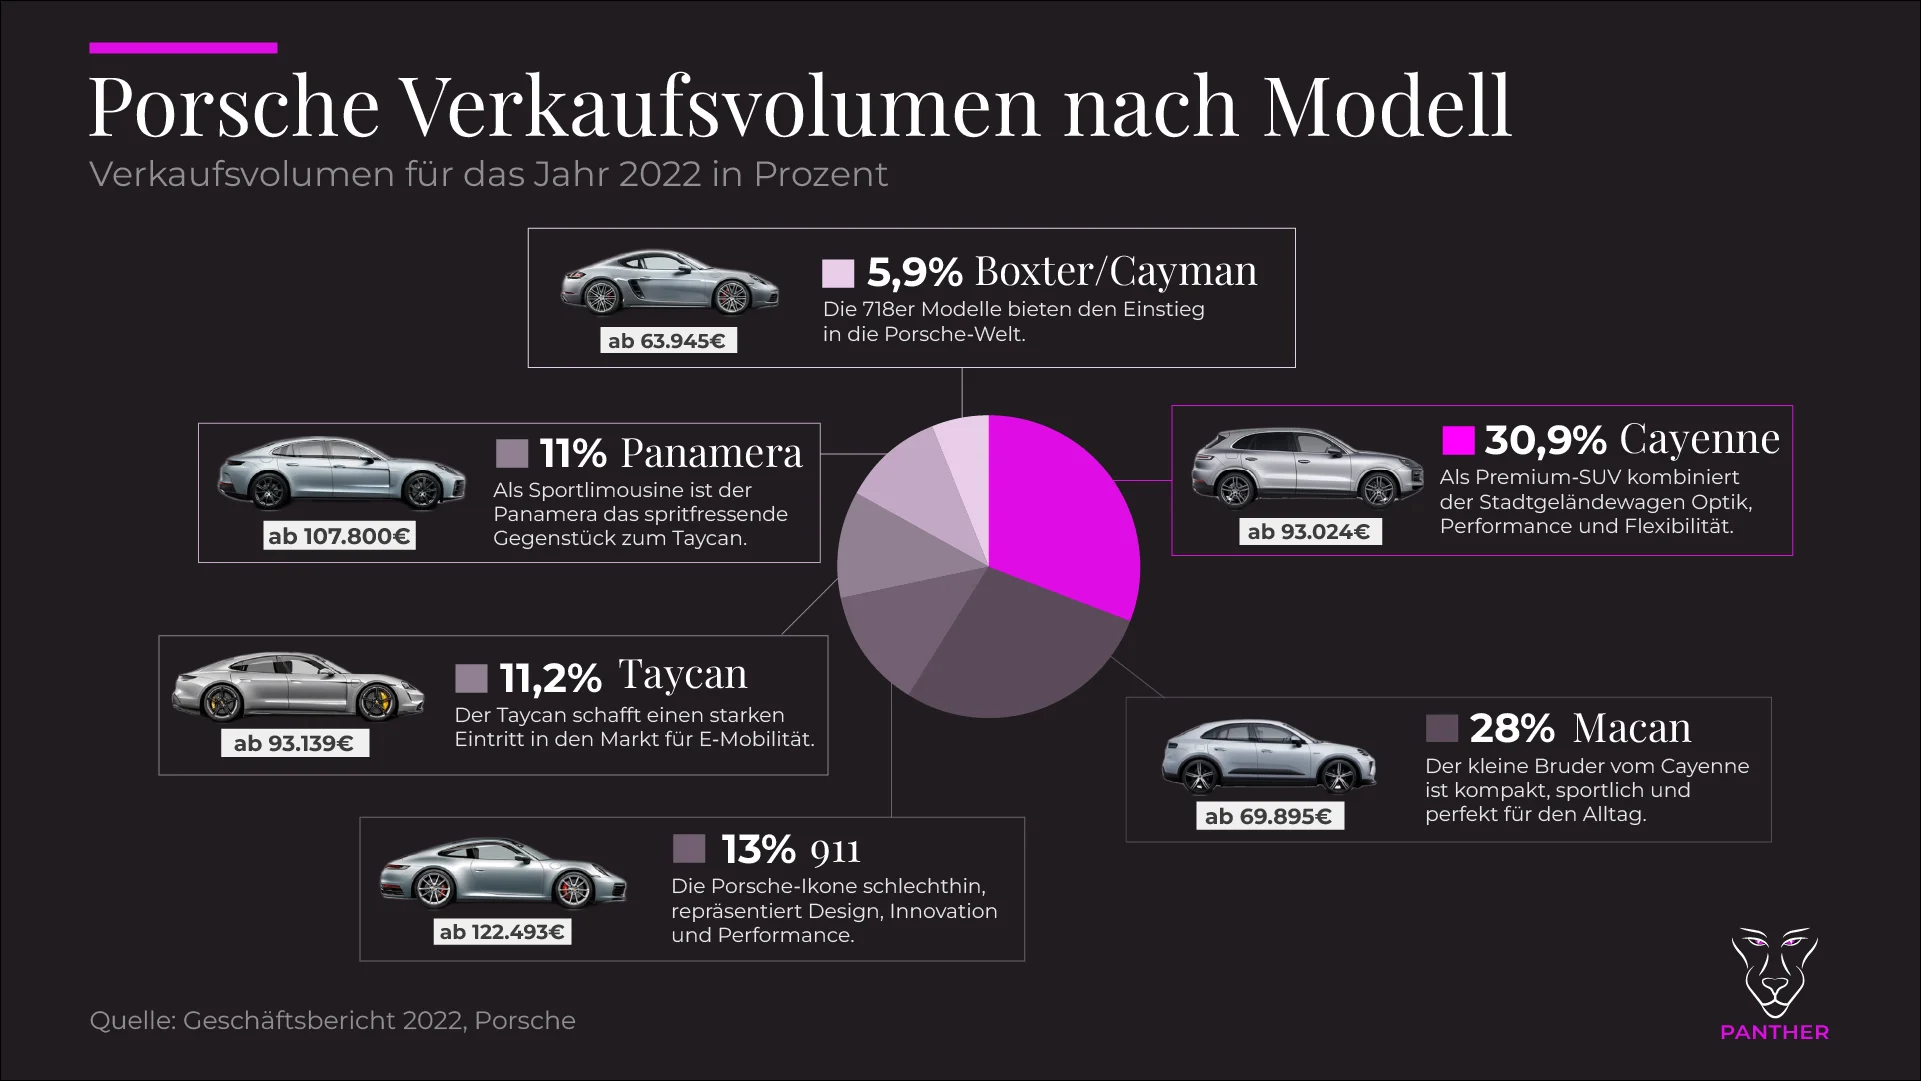 Porsche Verkaufsvolumen nach Modell 2022